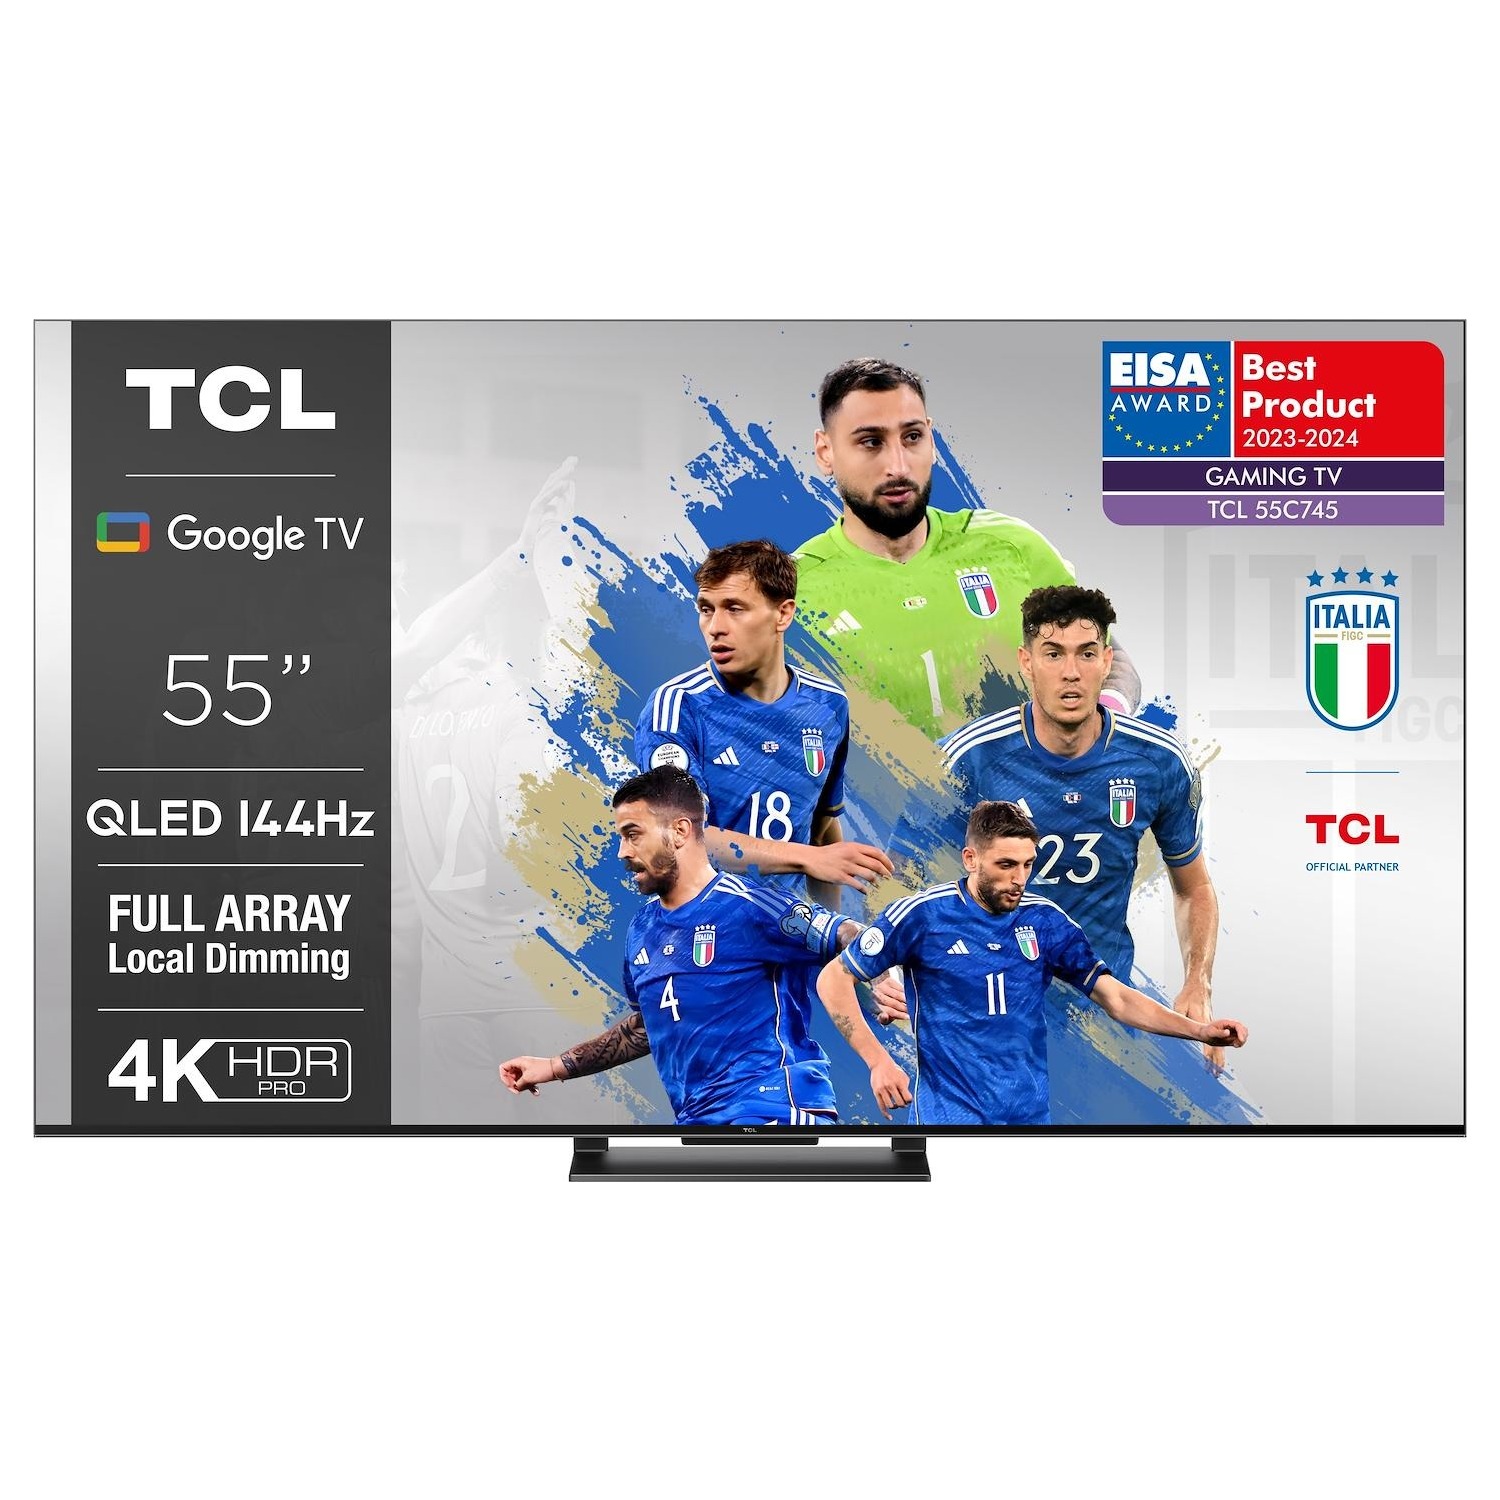 Immagine per TV LED TCL 4K QLED Google TV TCL55C749 da DIMOStore